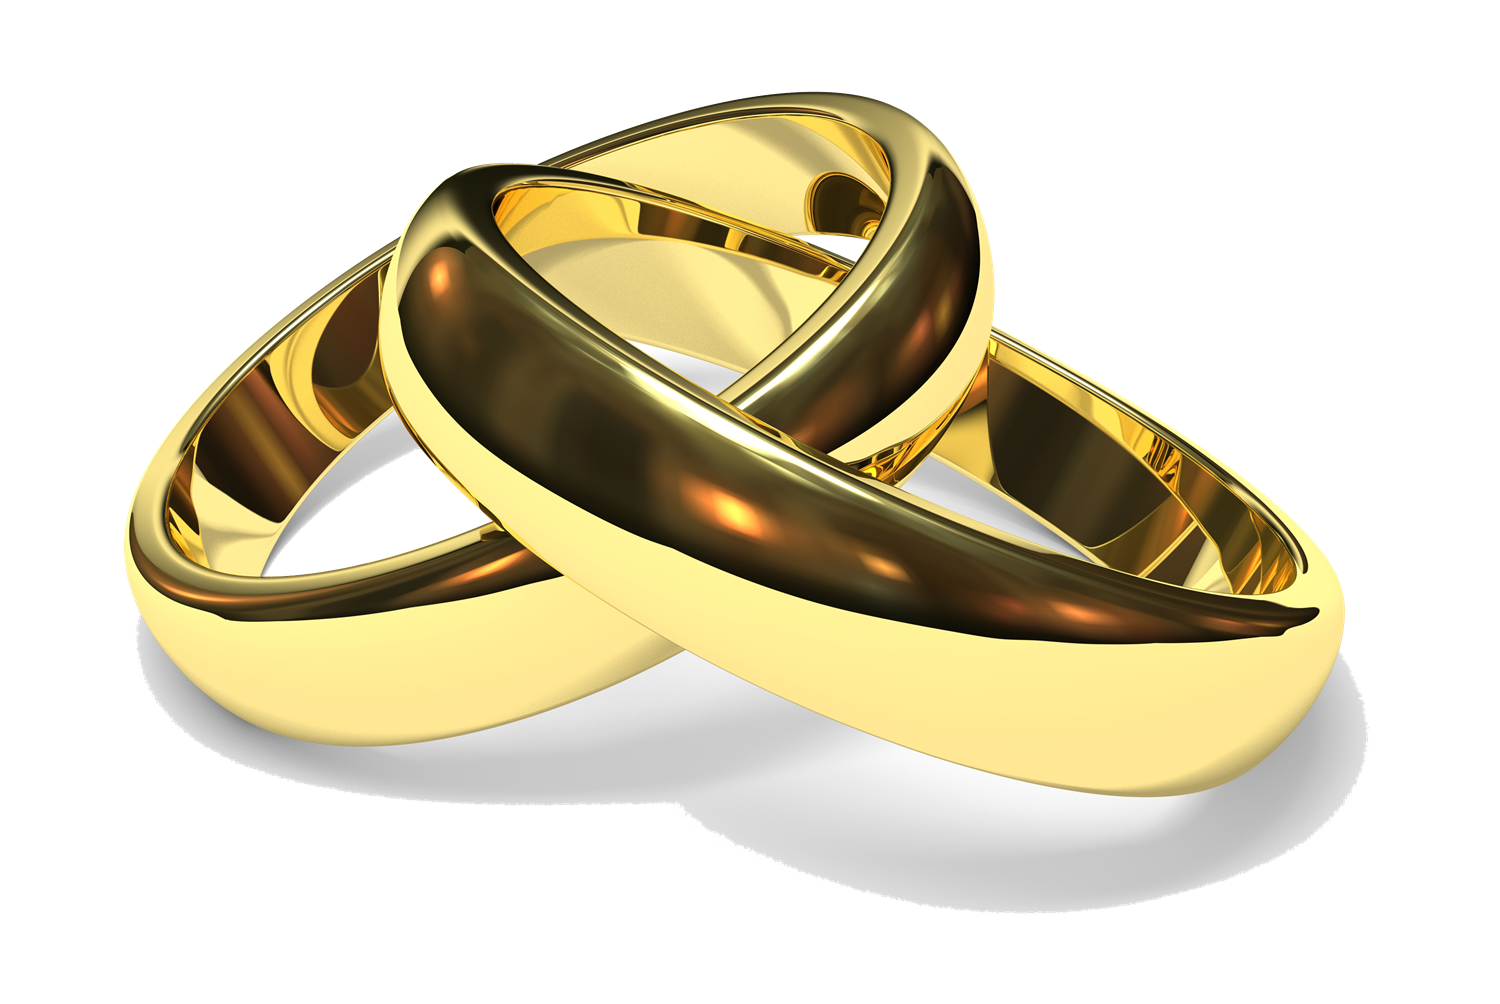 wedding ring, Simple, Modern,